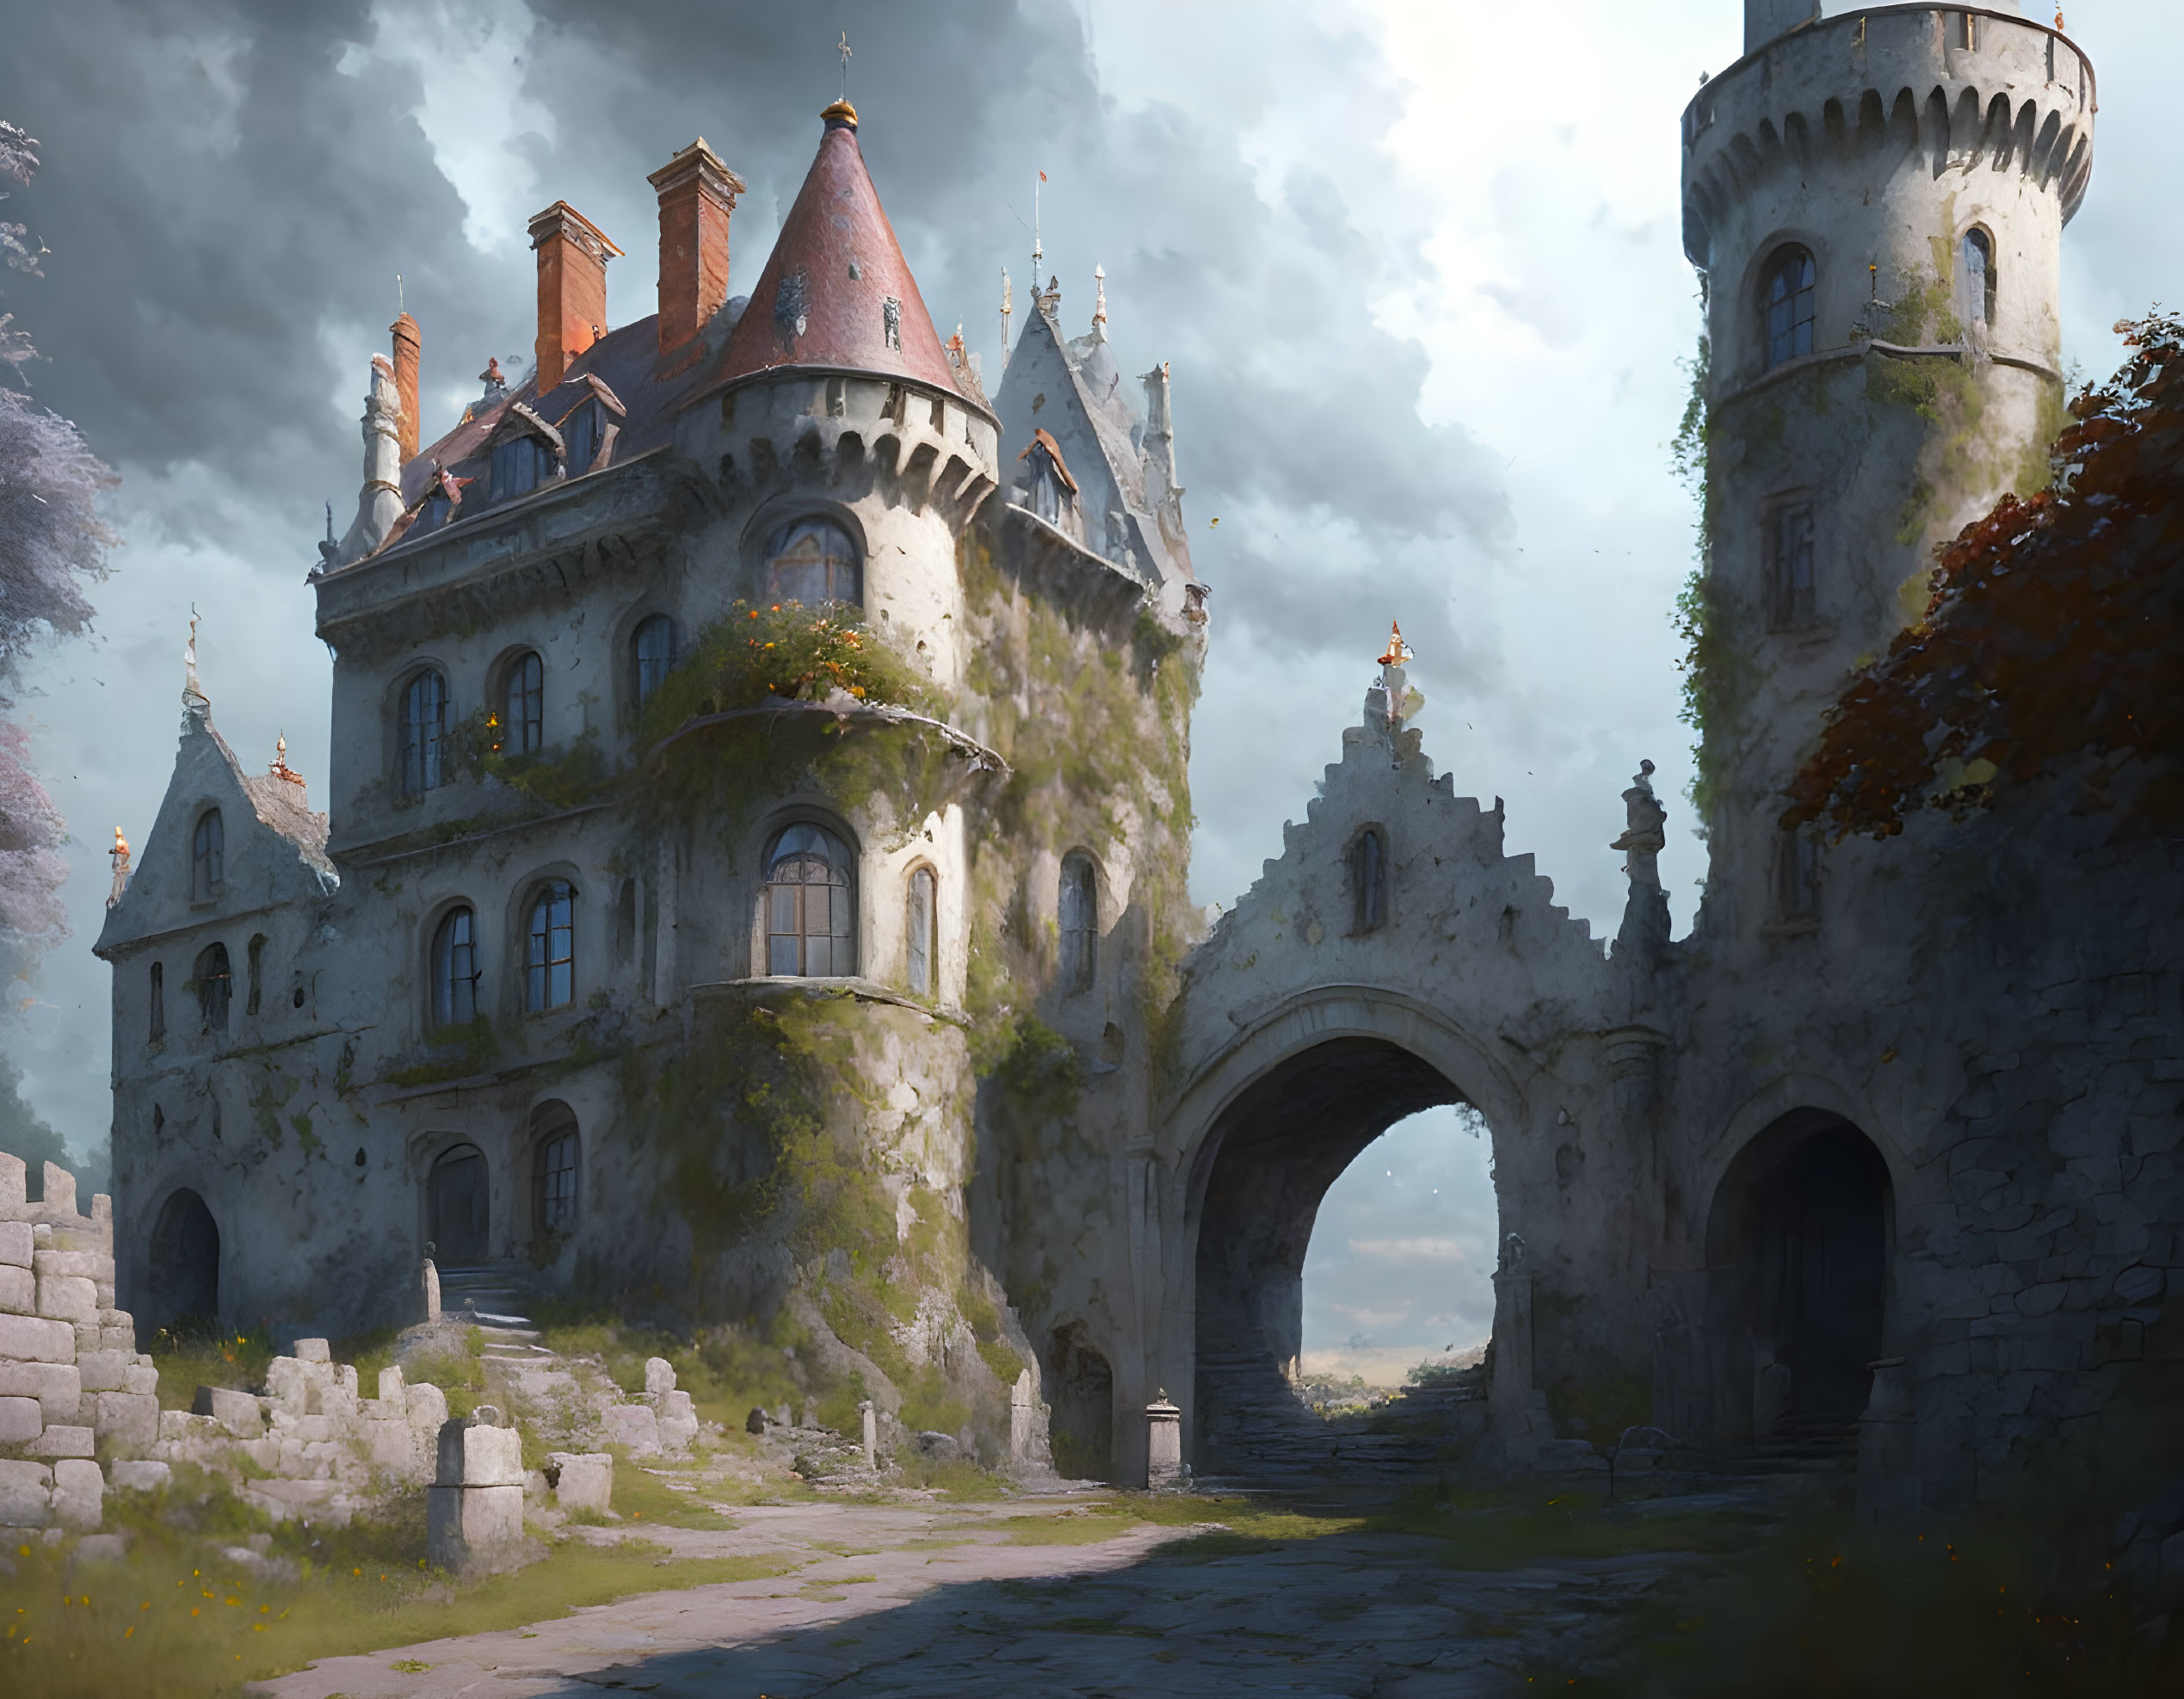 Enchanted castel